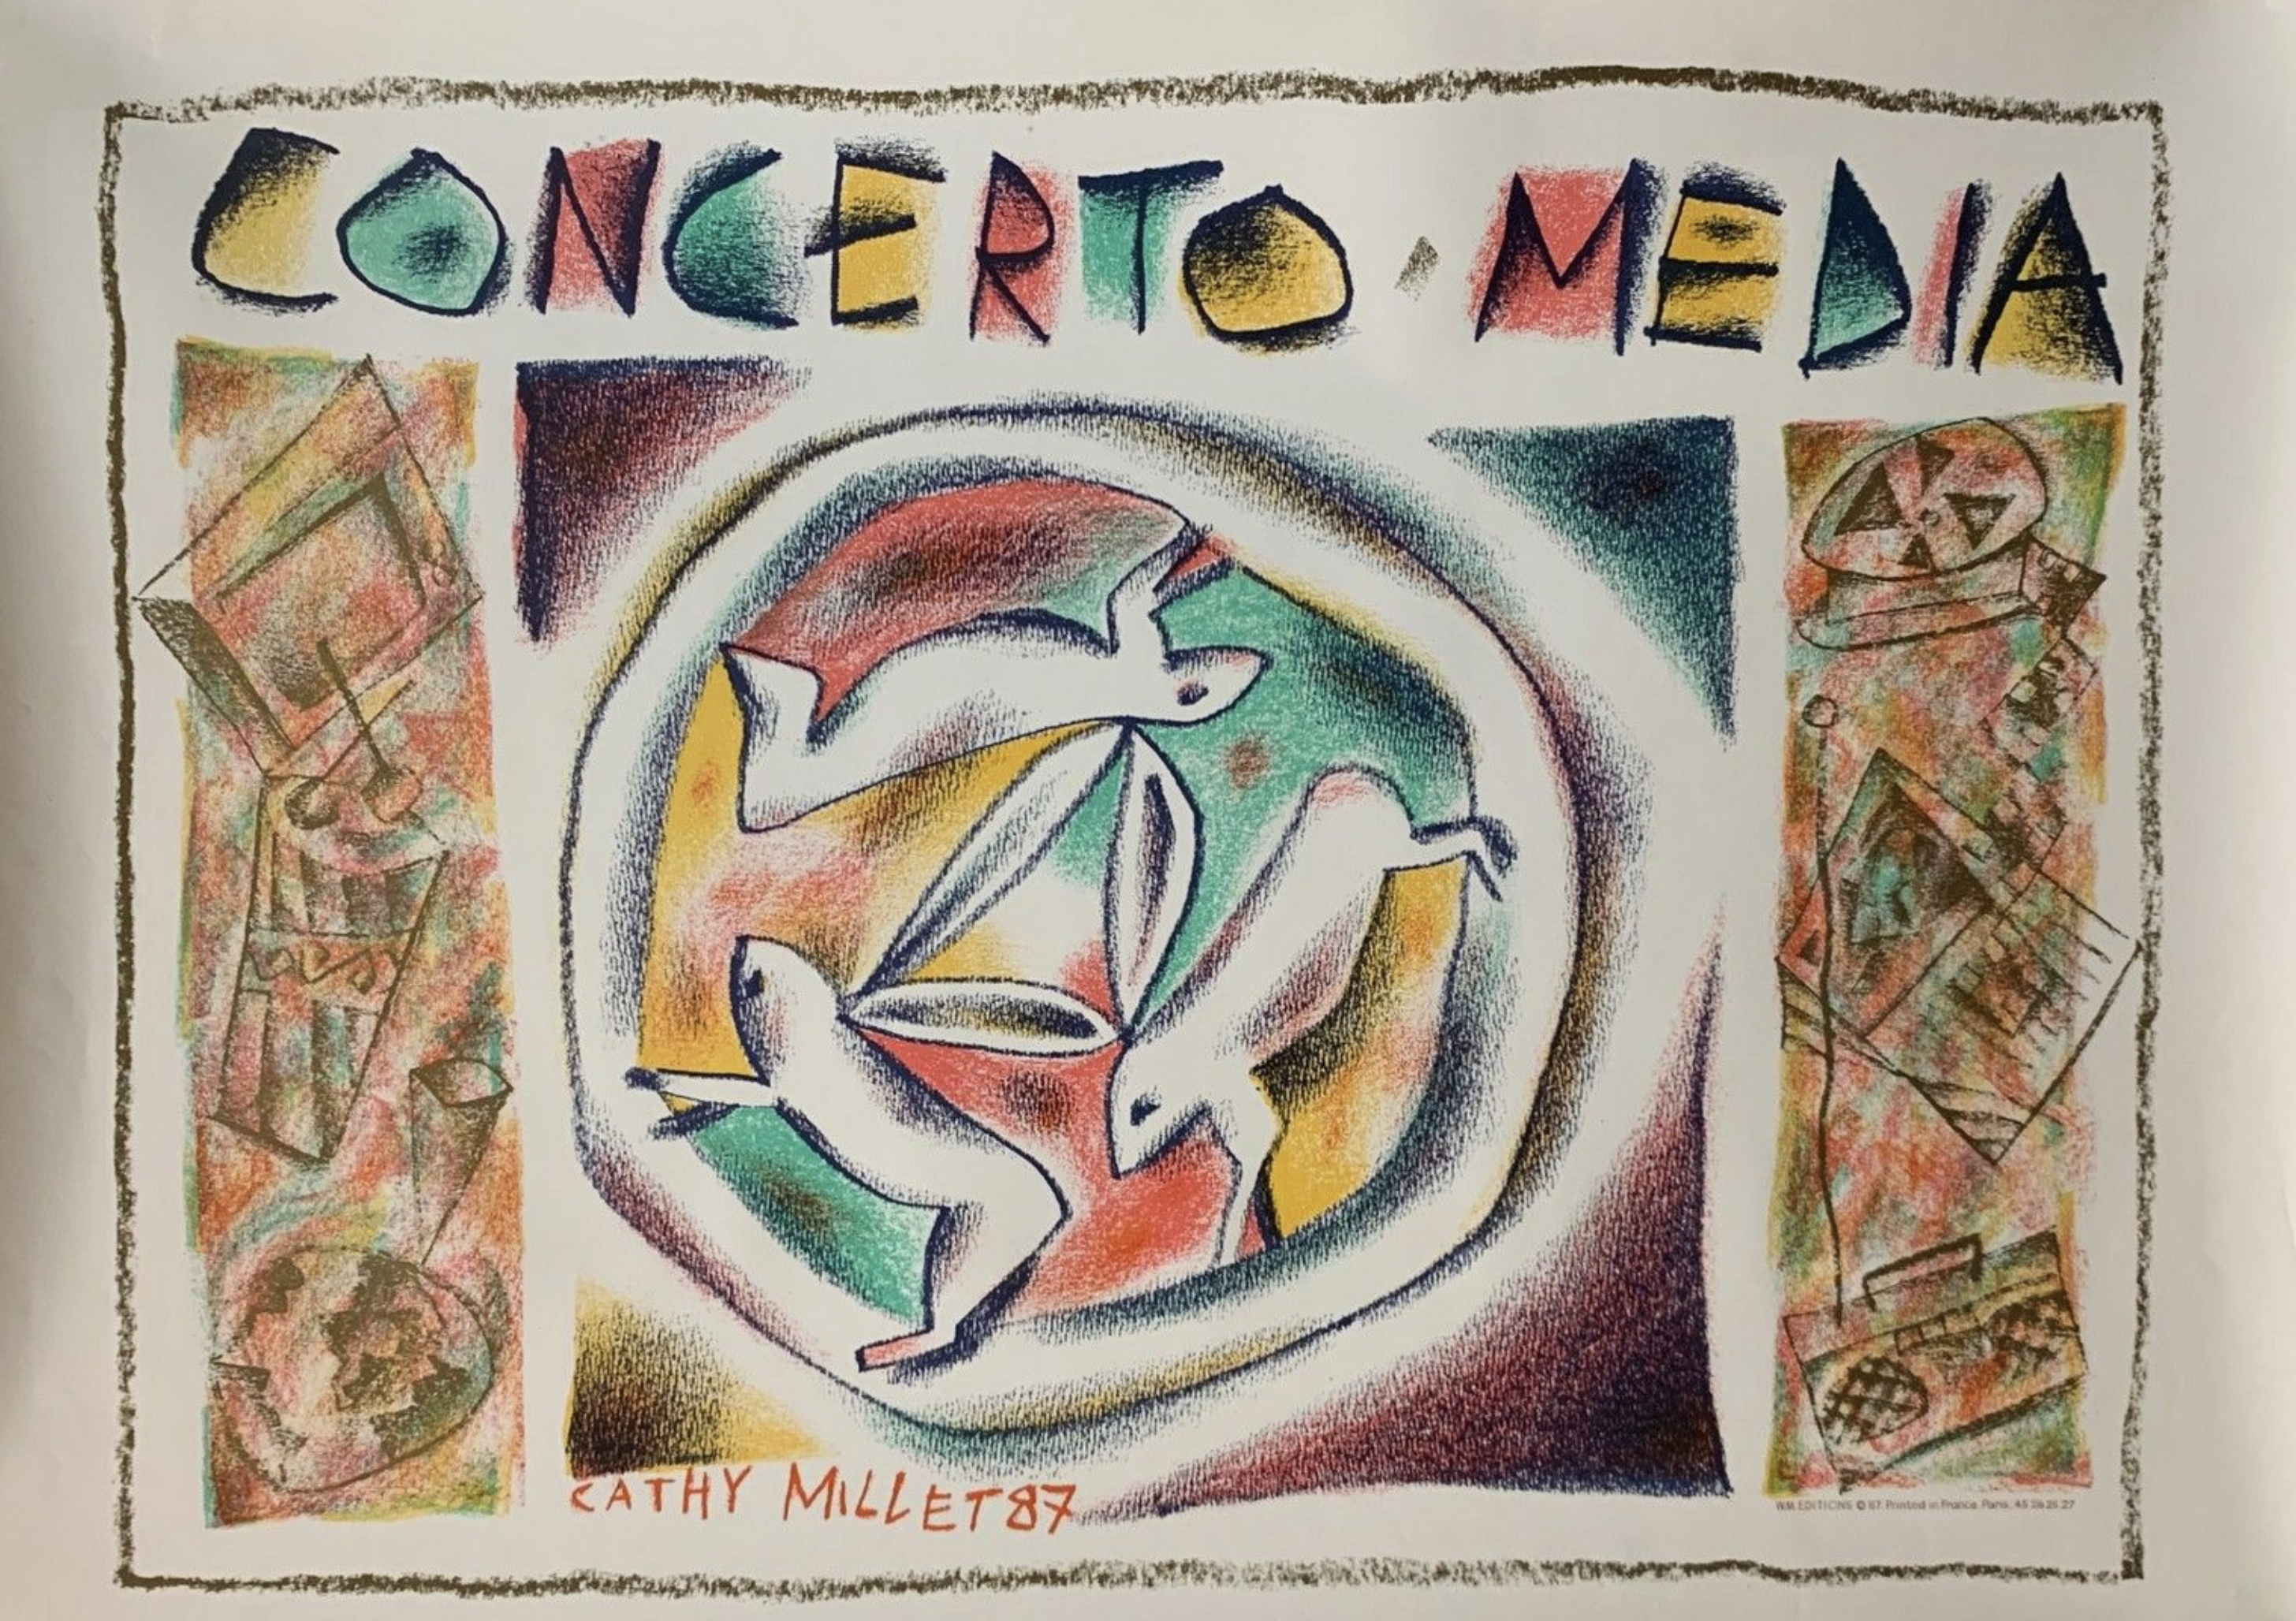 Concerto Media Original Vintage Poster Letitia Morris Gallery